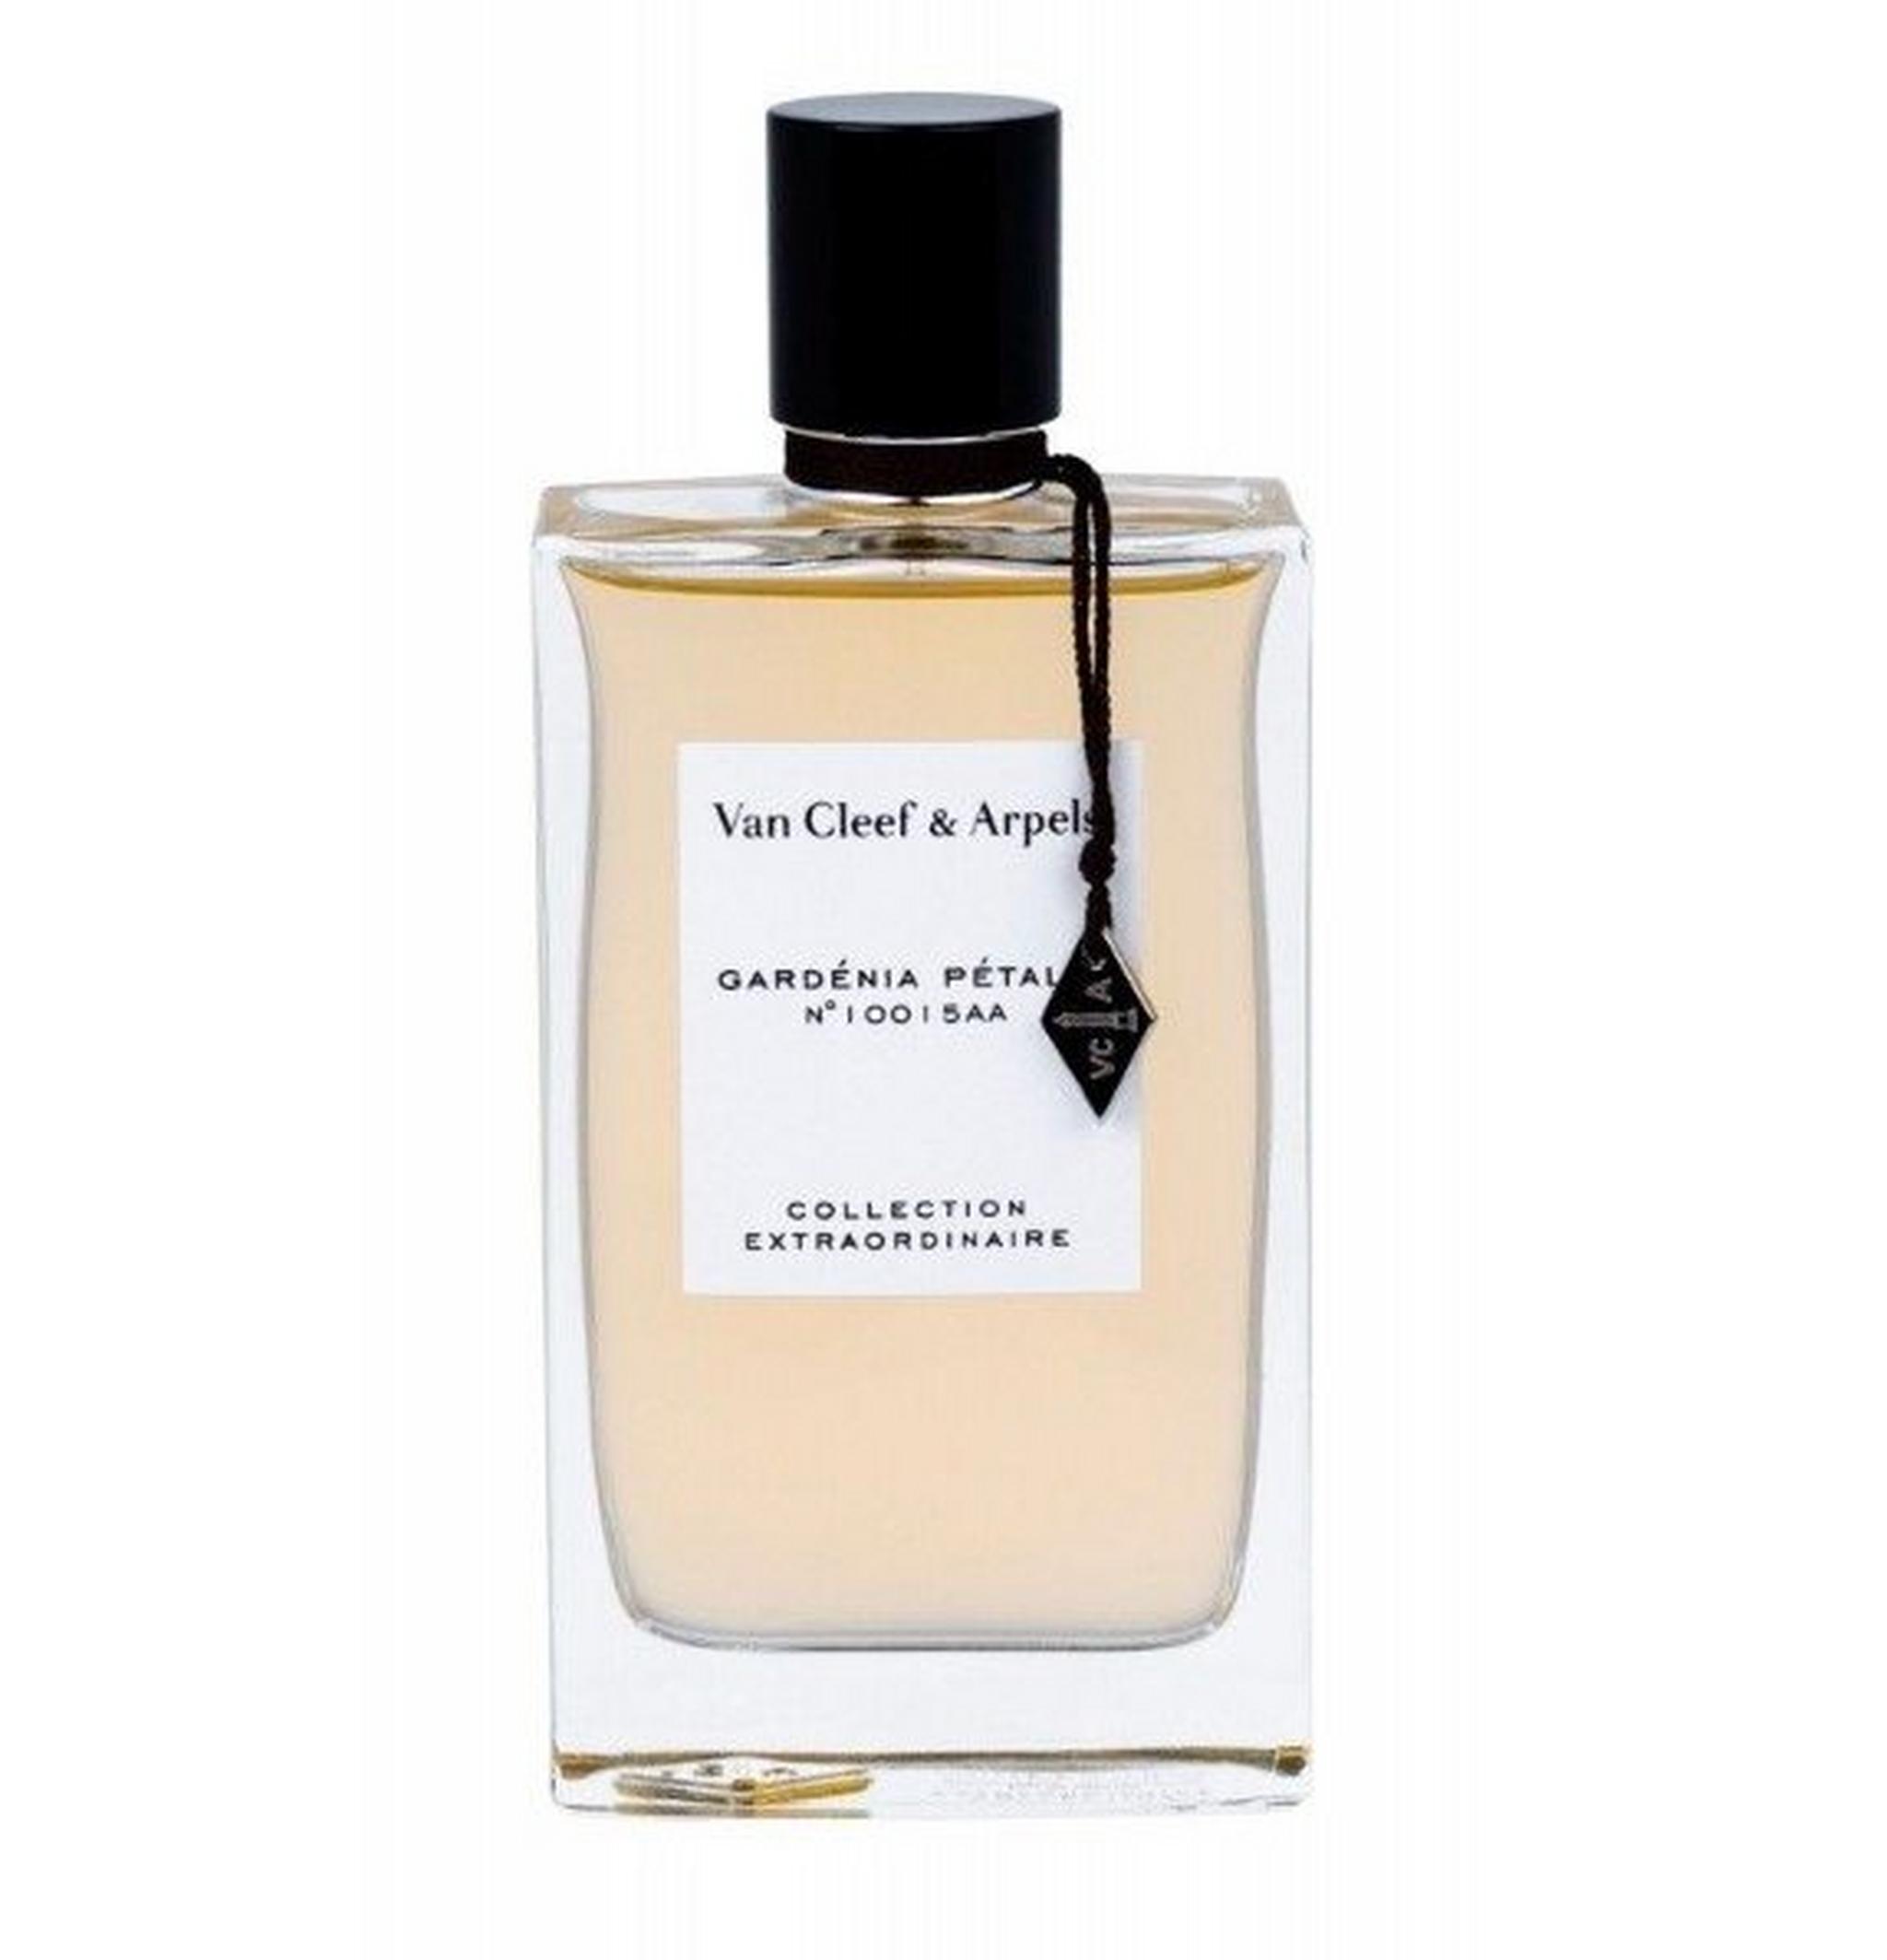 Van Cleef & Arpels Gardenia Petale Unisex Eau de Parfum 75Ml